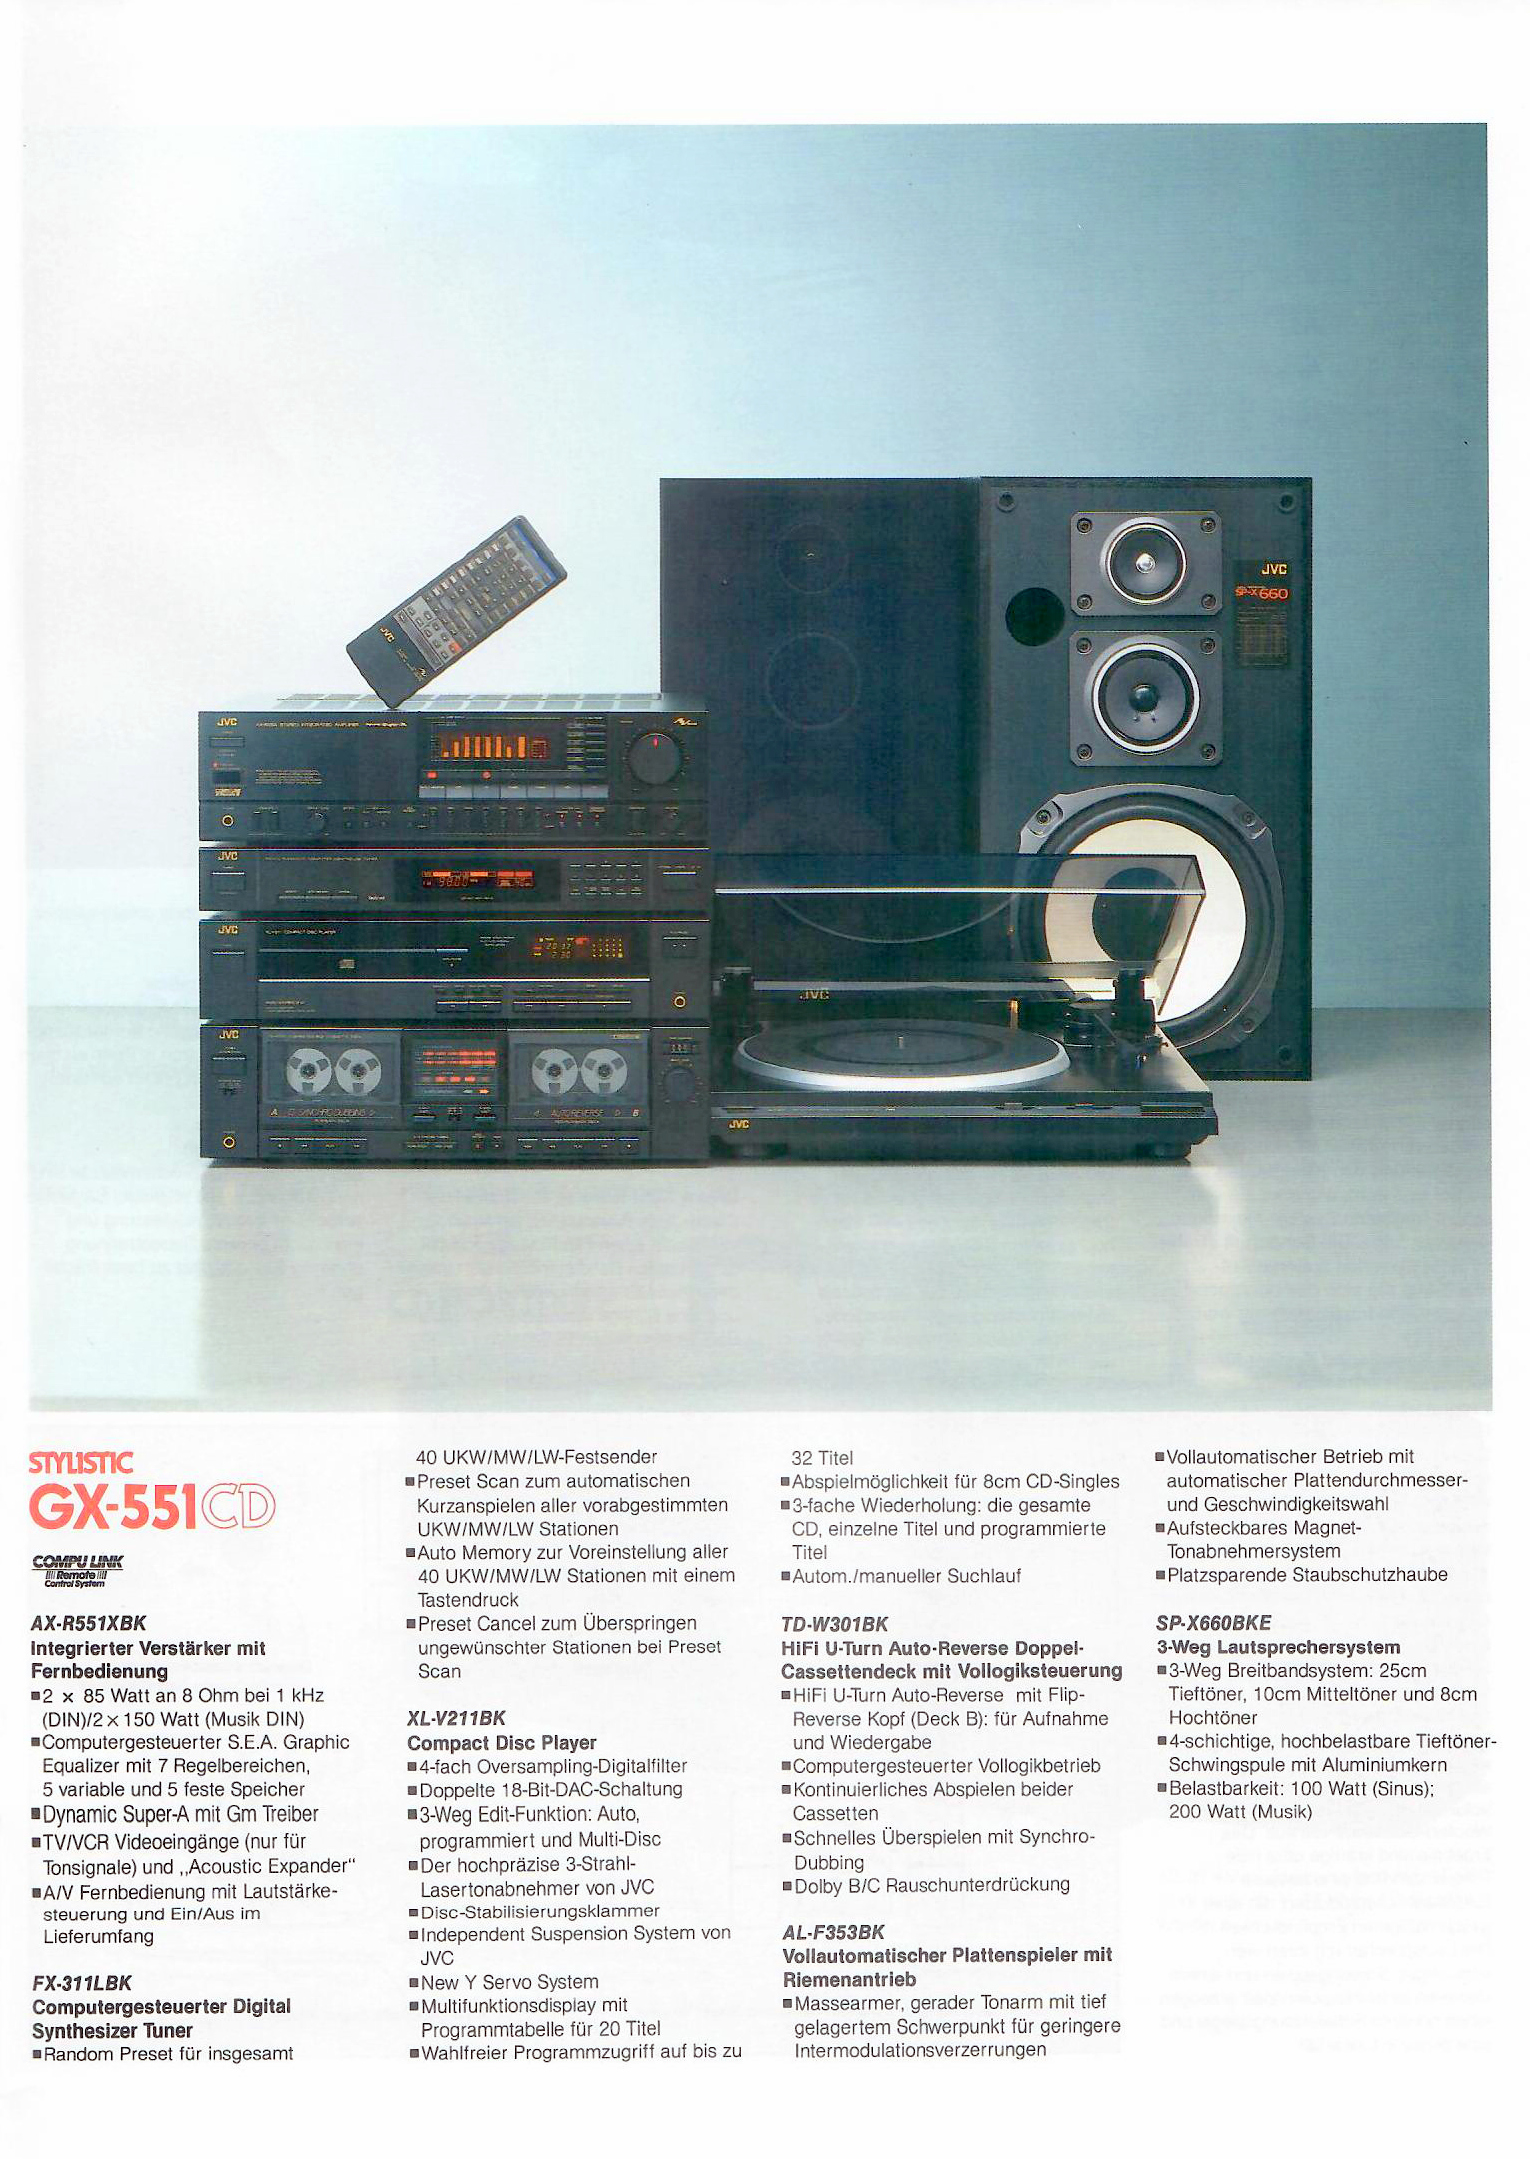 JVC Stylistic GX-551 CD-Prospekt-1989.jpg